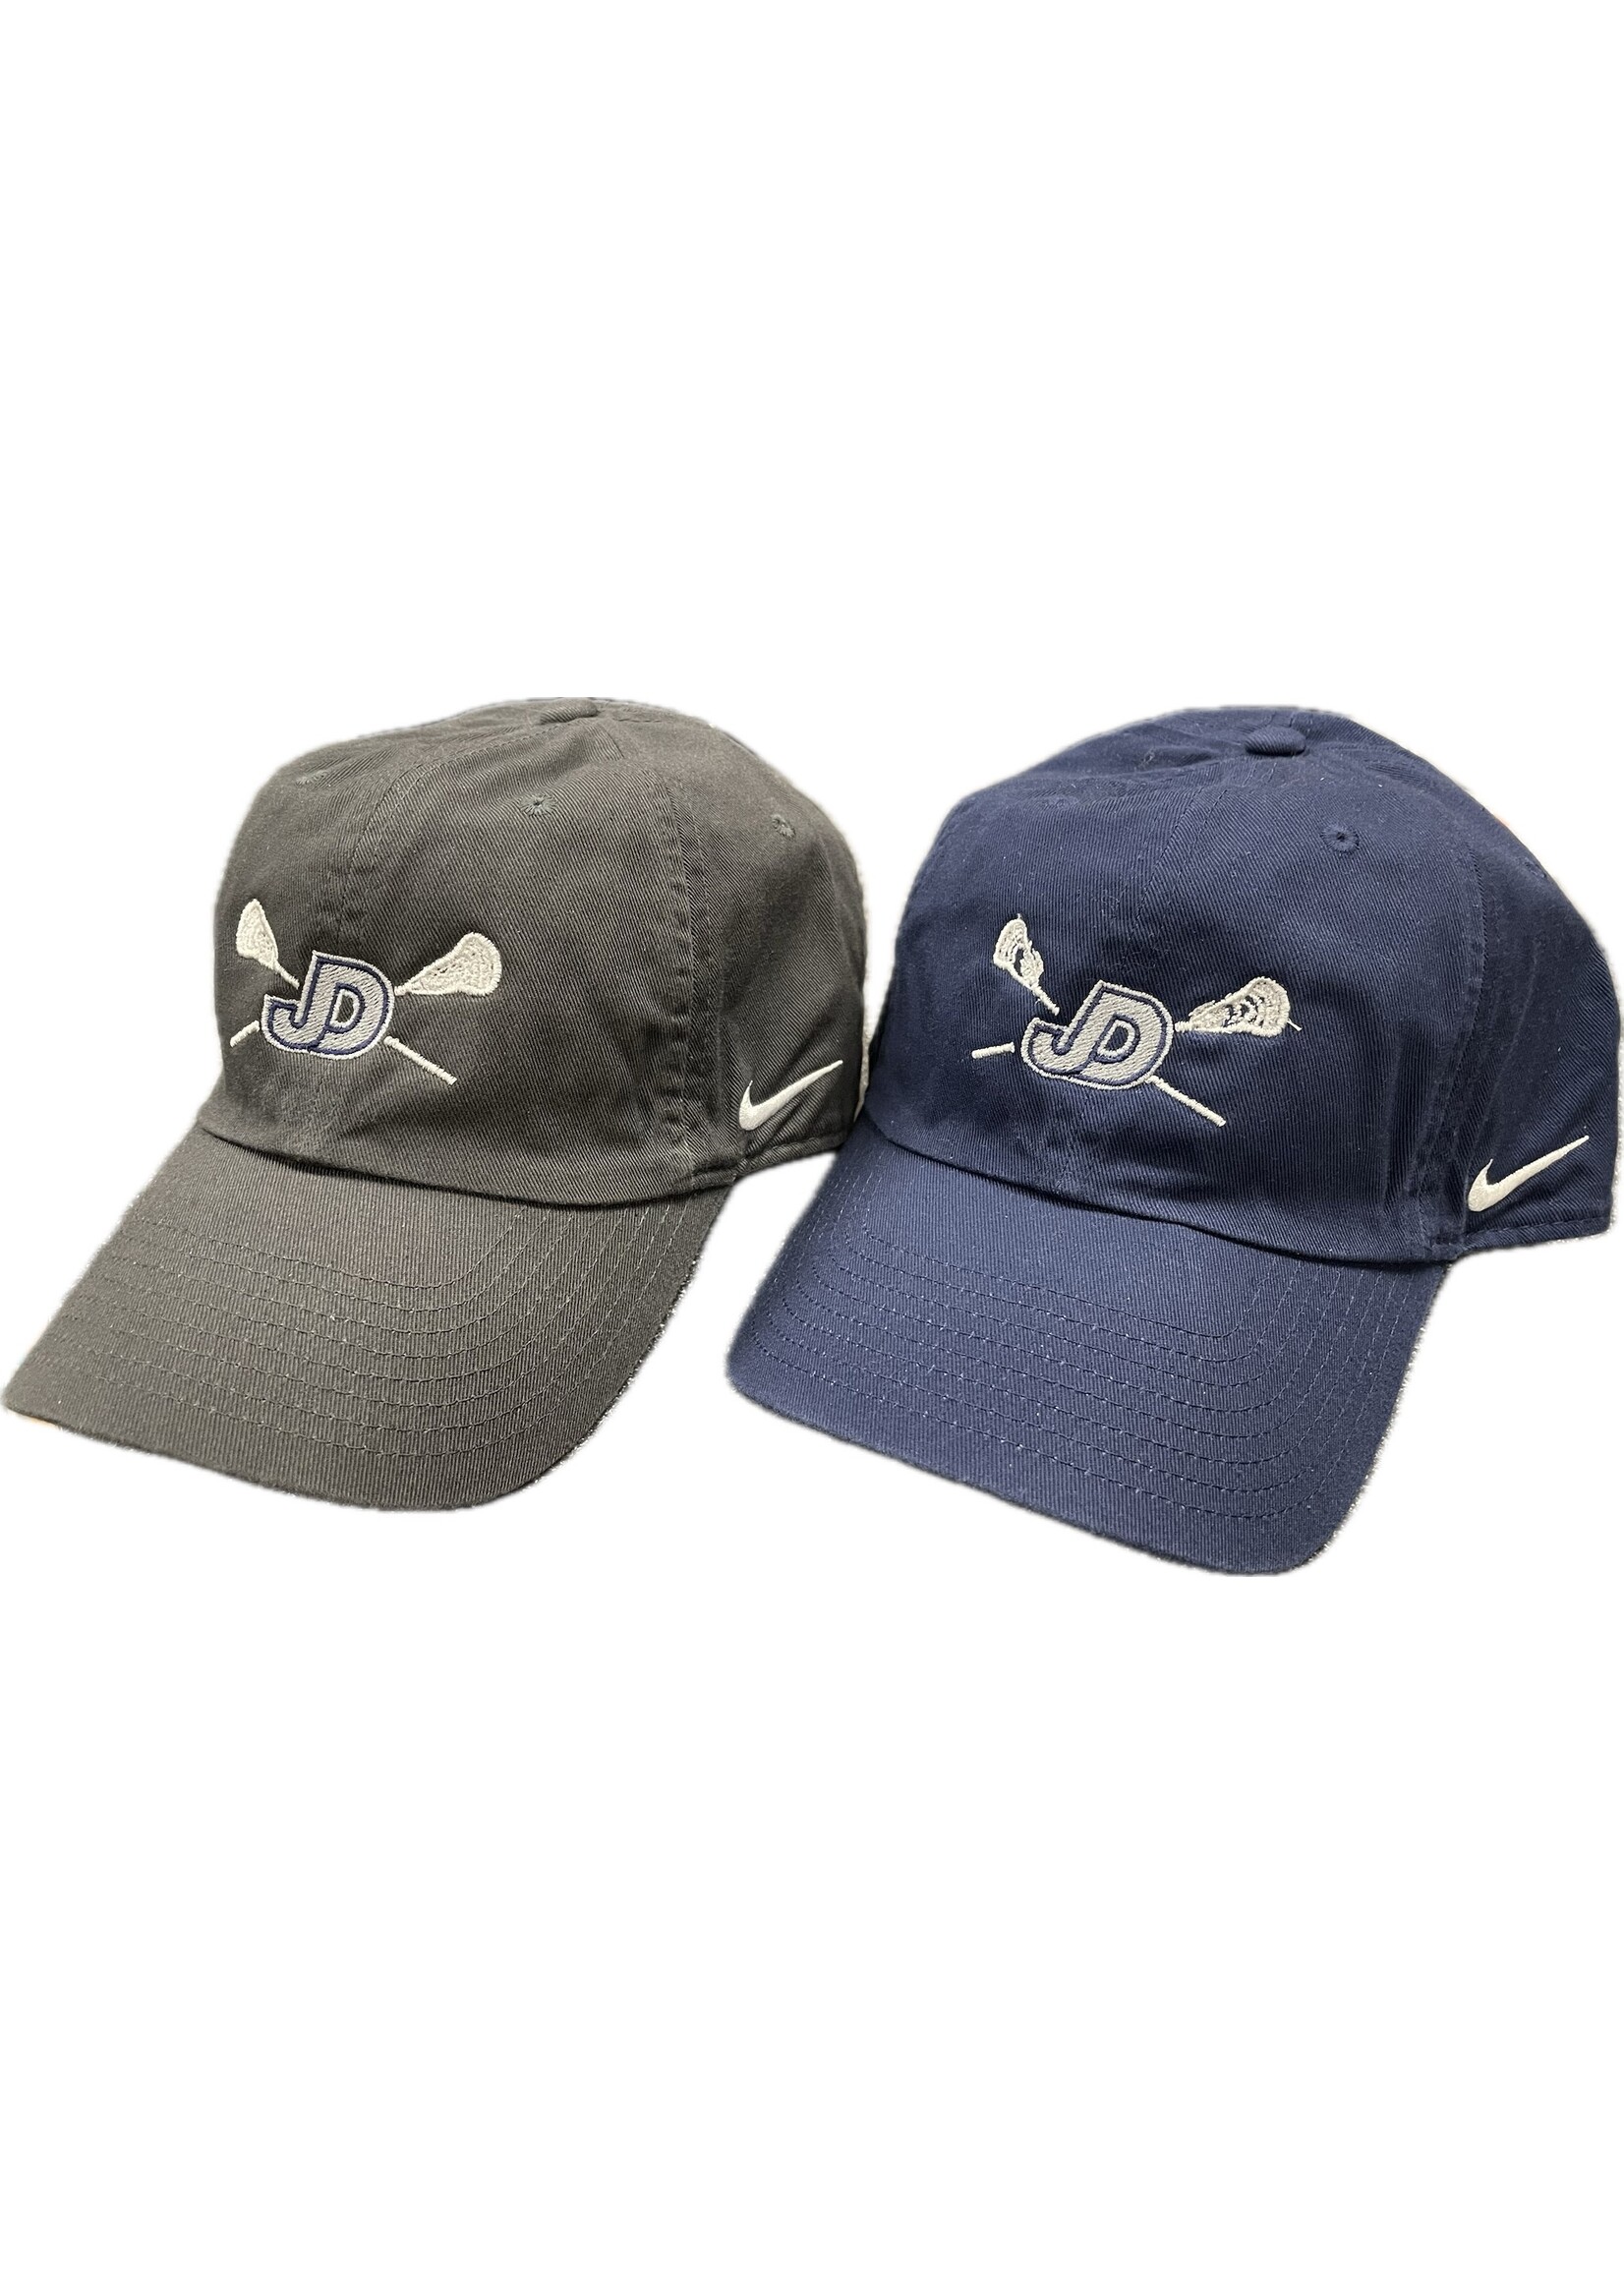 NON-UNIFORM JD Lacrosse Sticks NIKE Hat